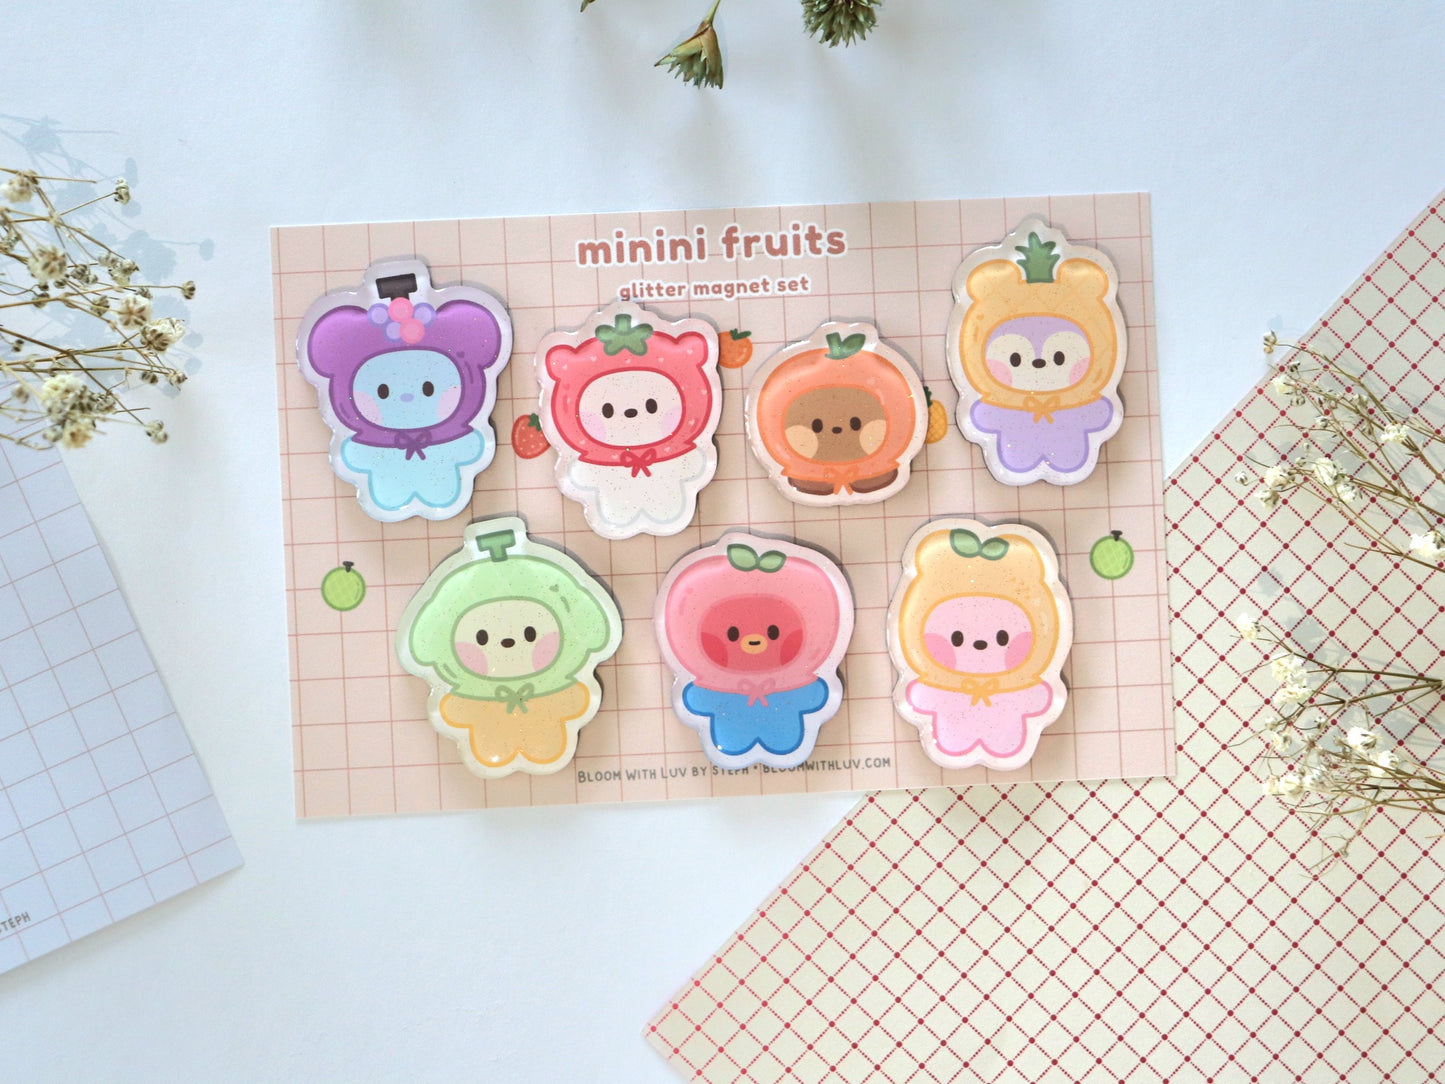 Minini Fruits Small Acrylic Glitter Magnets